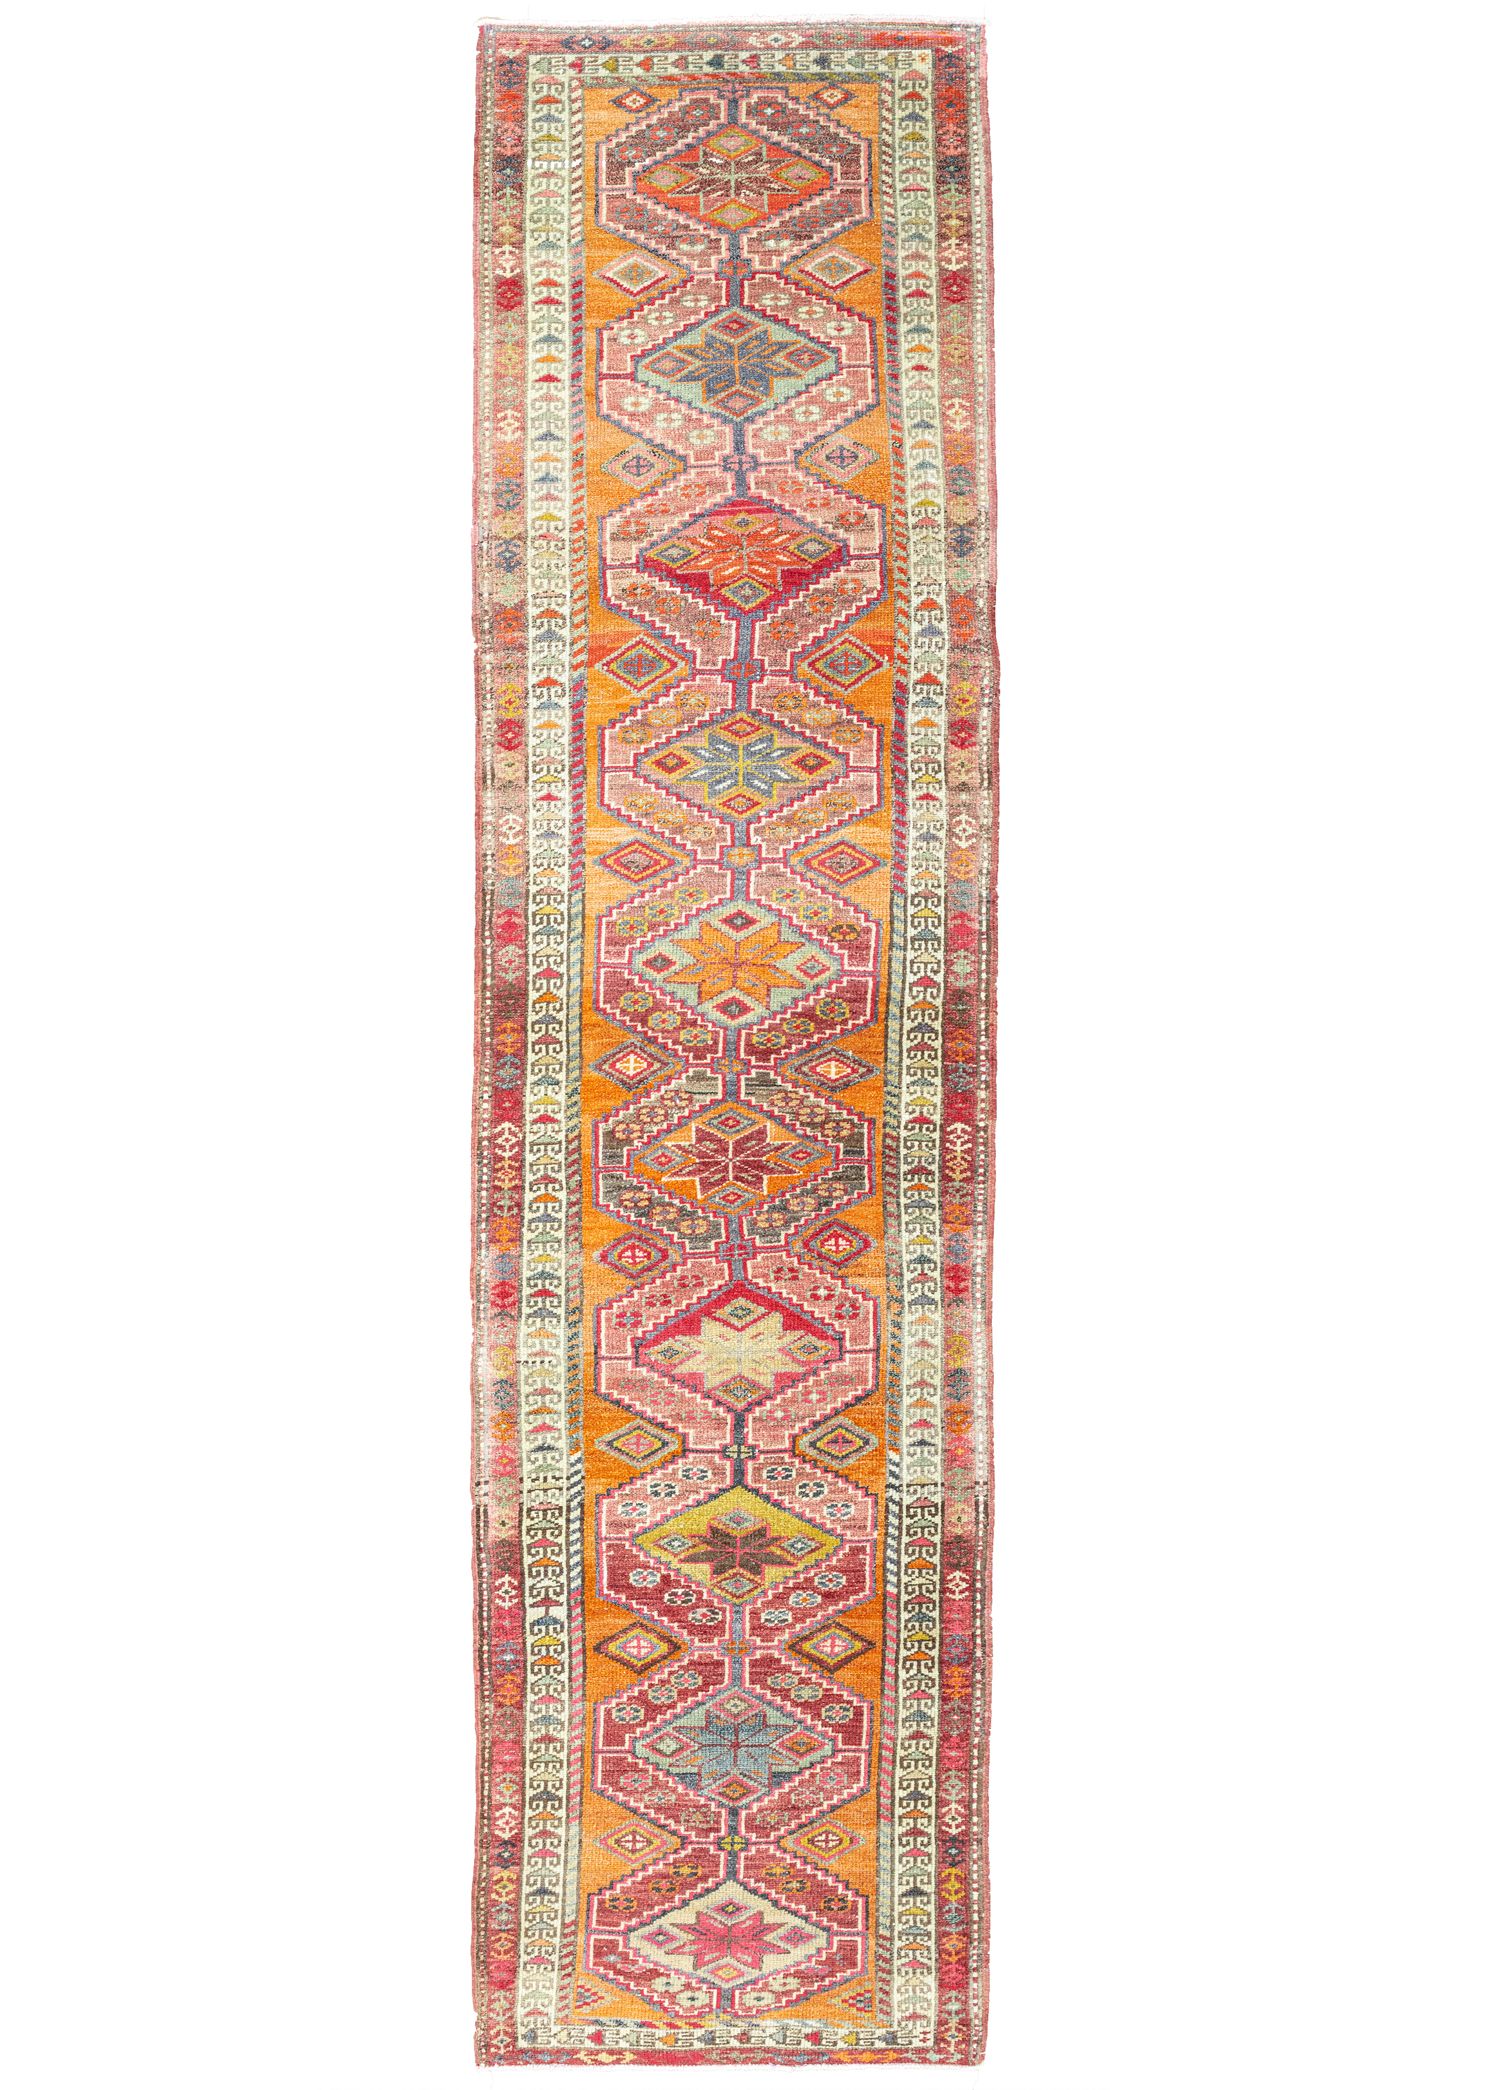 Kuzca Geometric Patterned Wool Herki Runner 91x408 cm